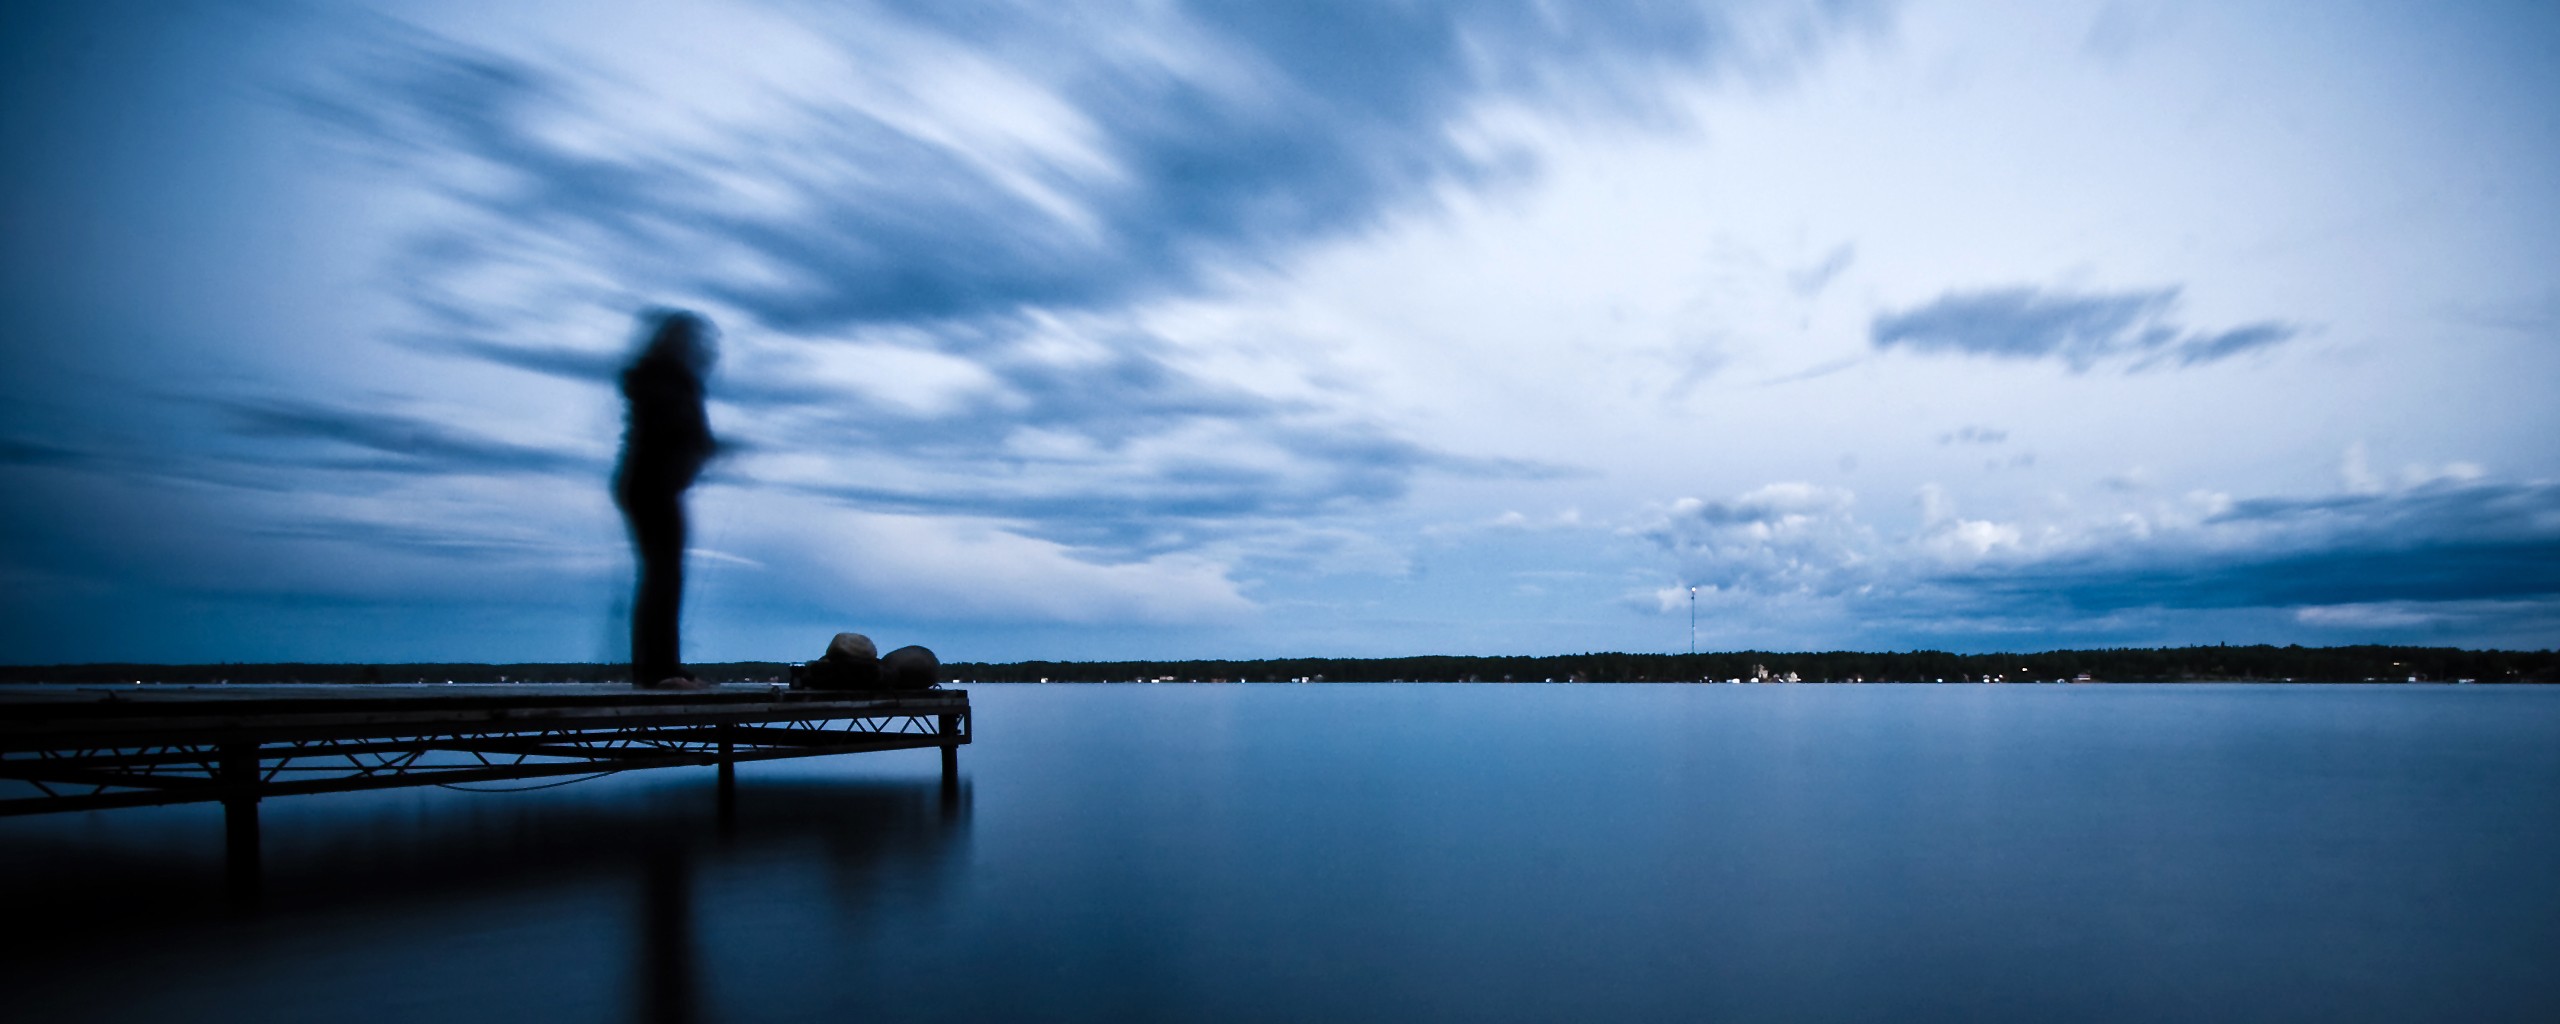 General 2560x1024 coast long exposure blue clouds pier silhouette lake